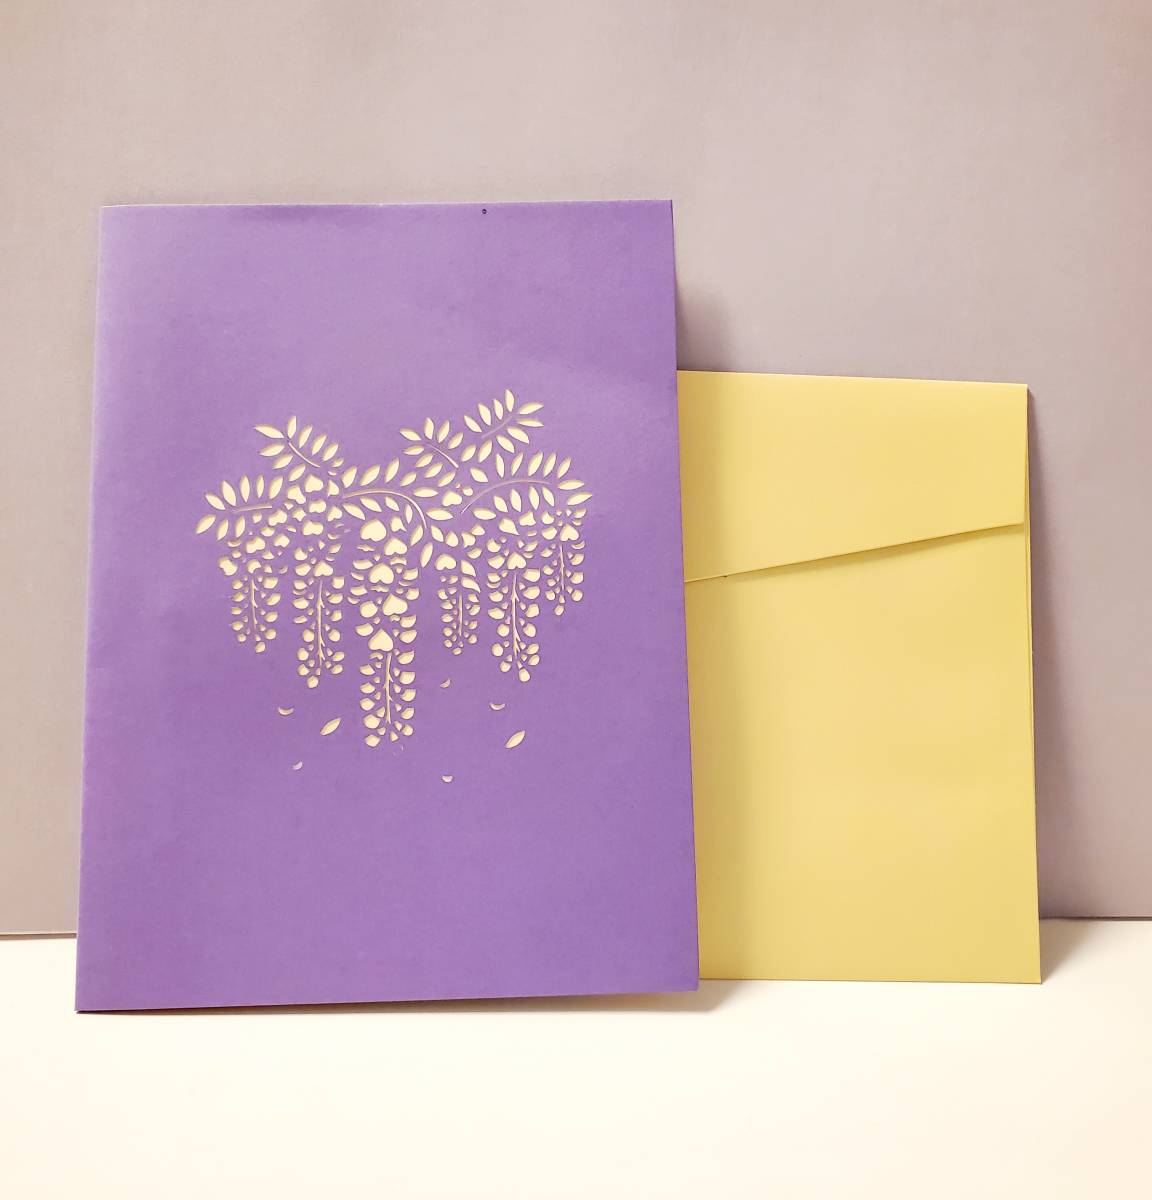  solid card HANAKO stone chip puts out card Fuji wistaria. flower purple wistaria flower. card greeting card multipurpose card 